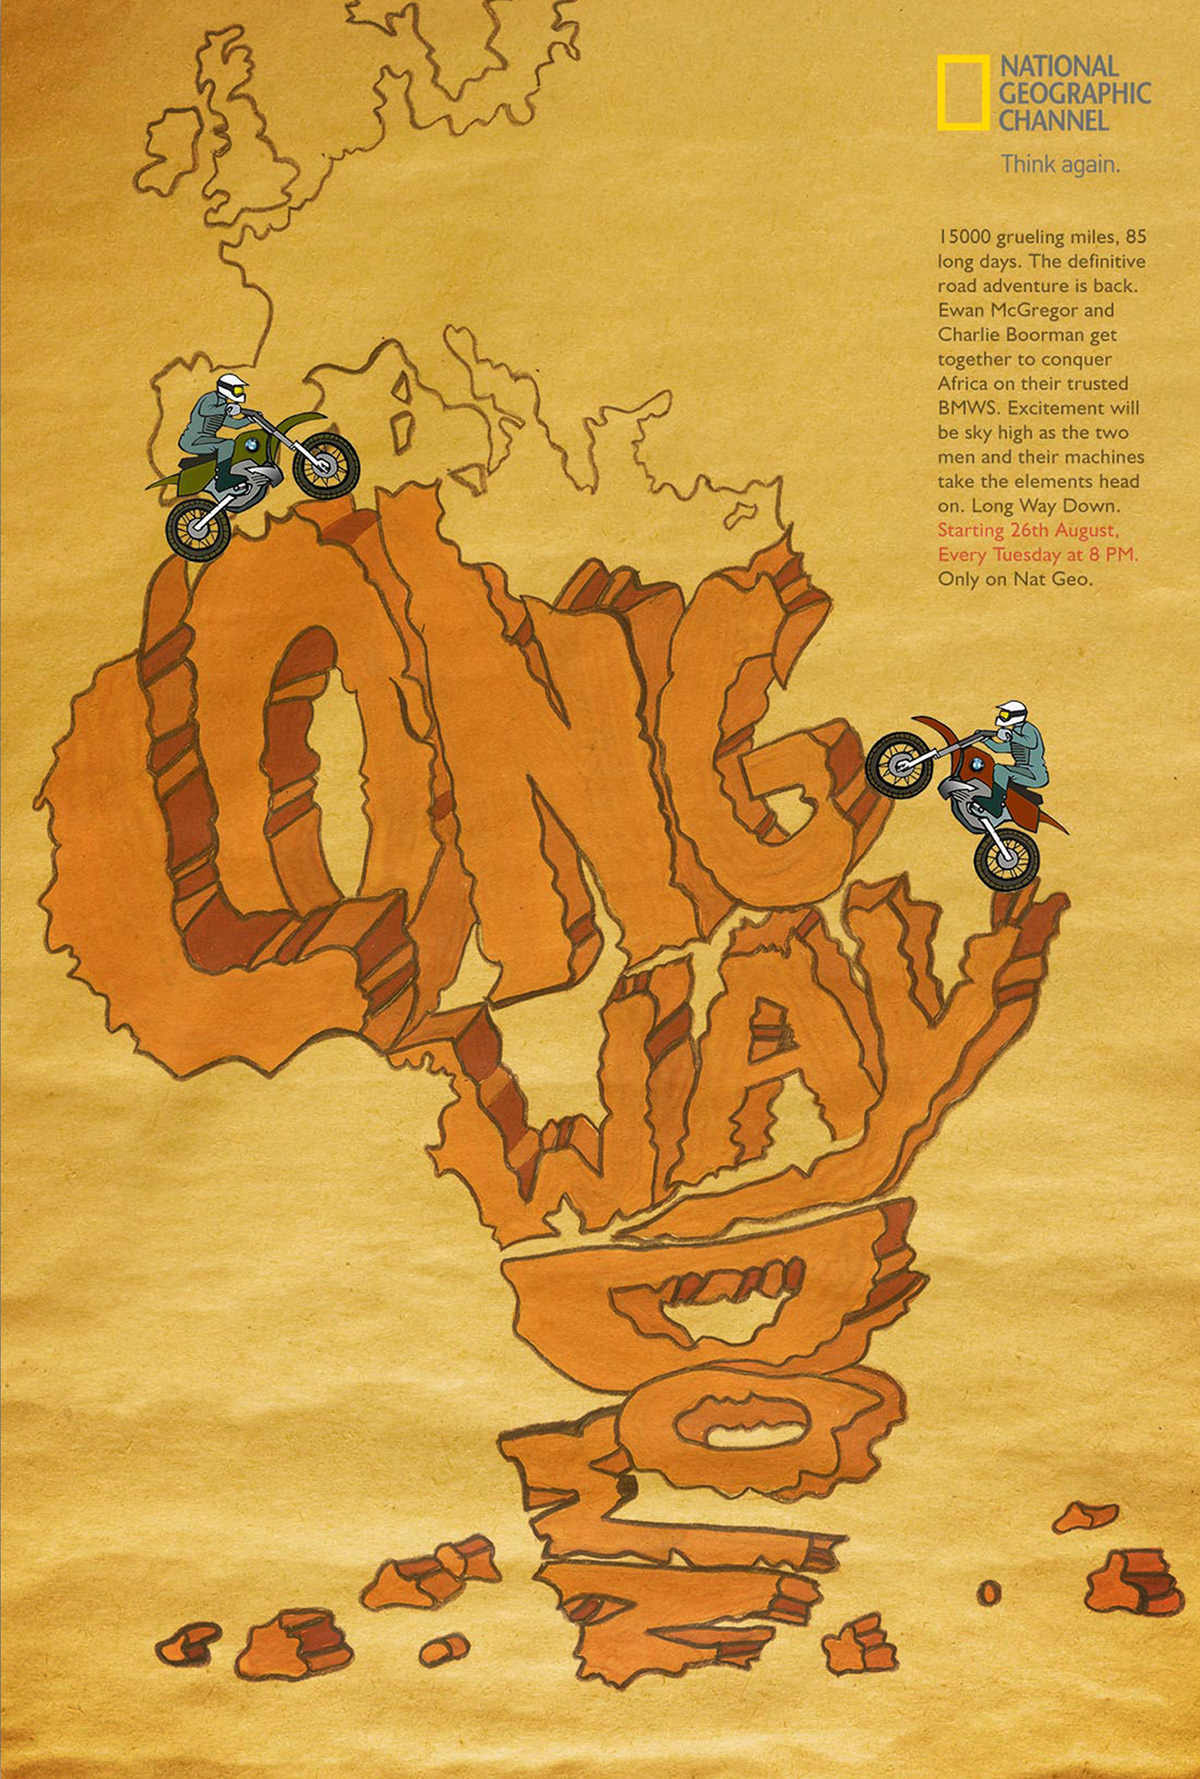 national geographic ngc Bike africa Long Way Down adventure press advertisement